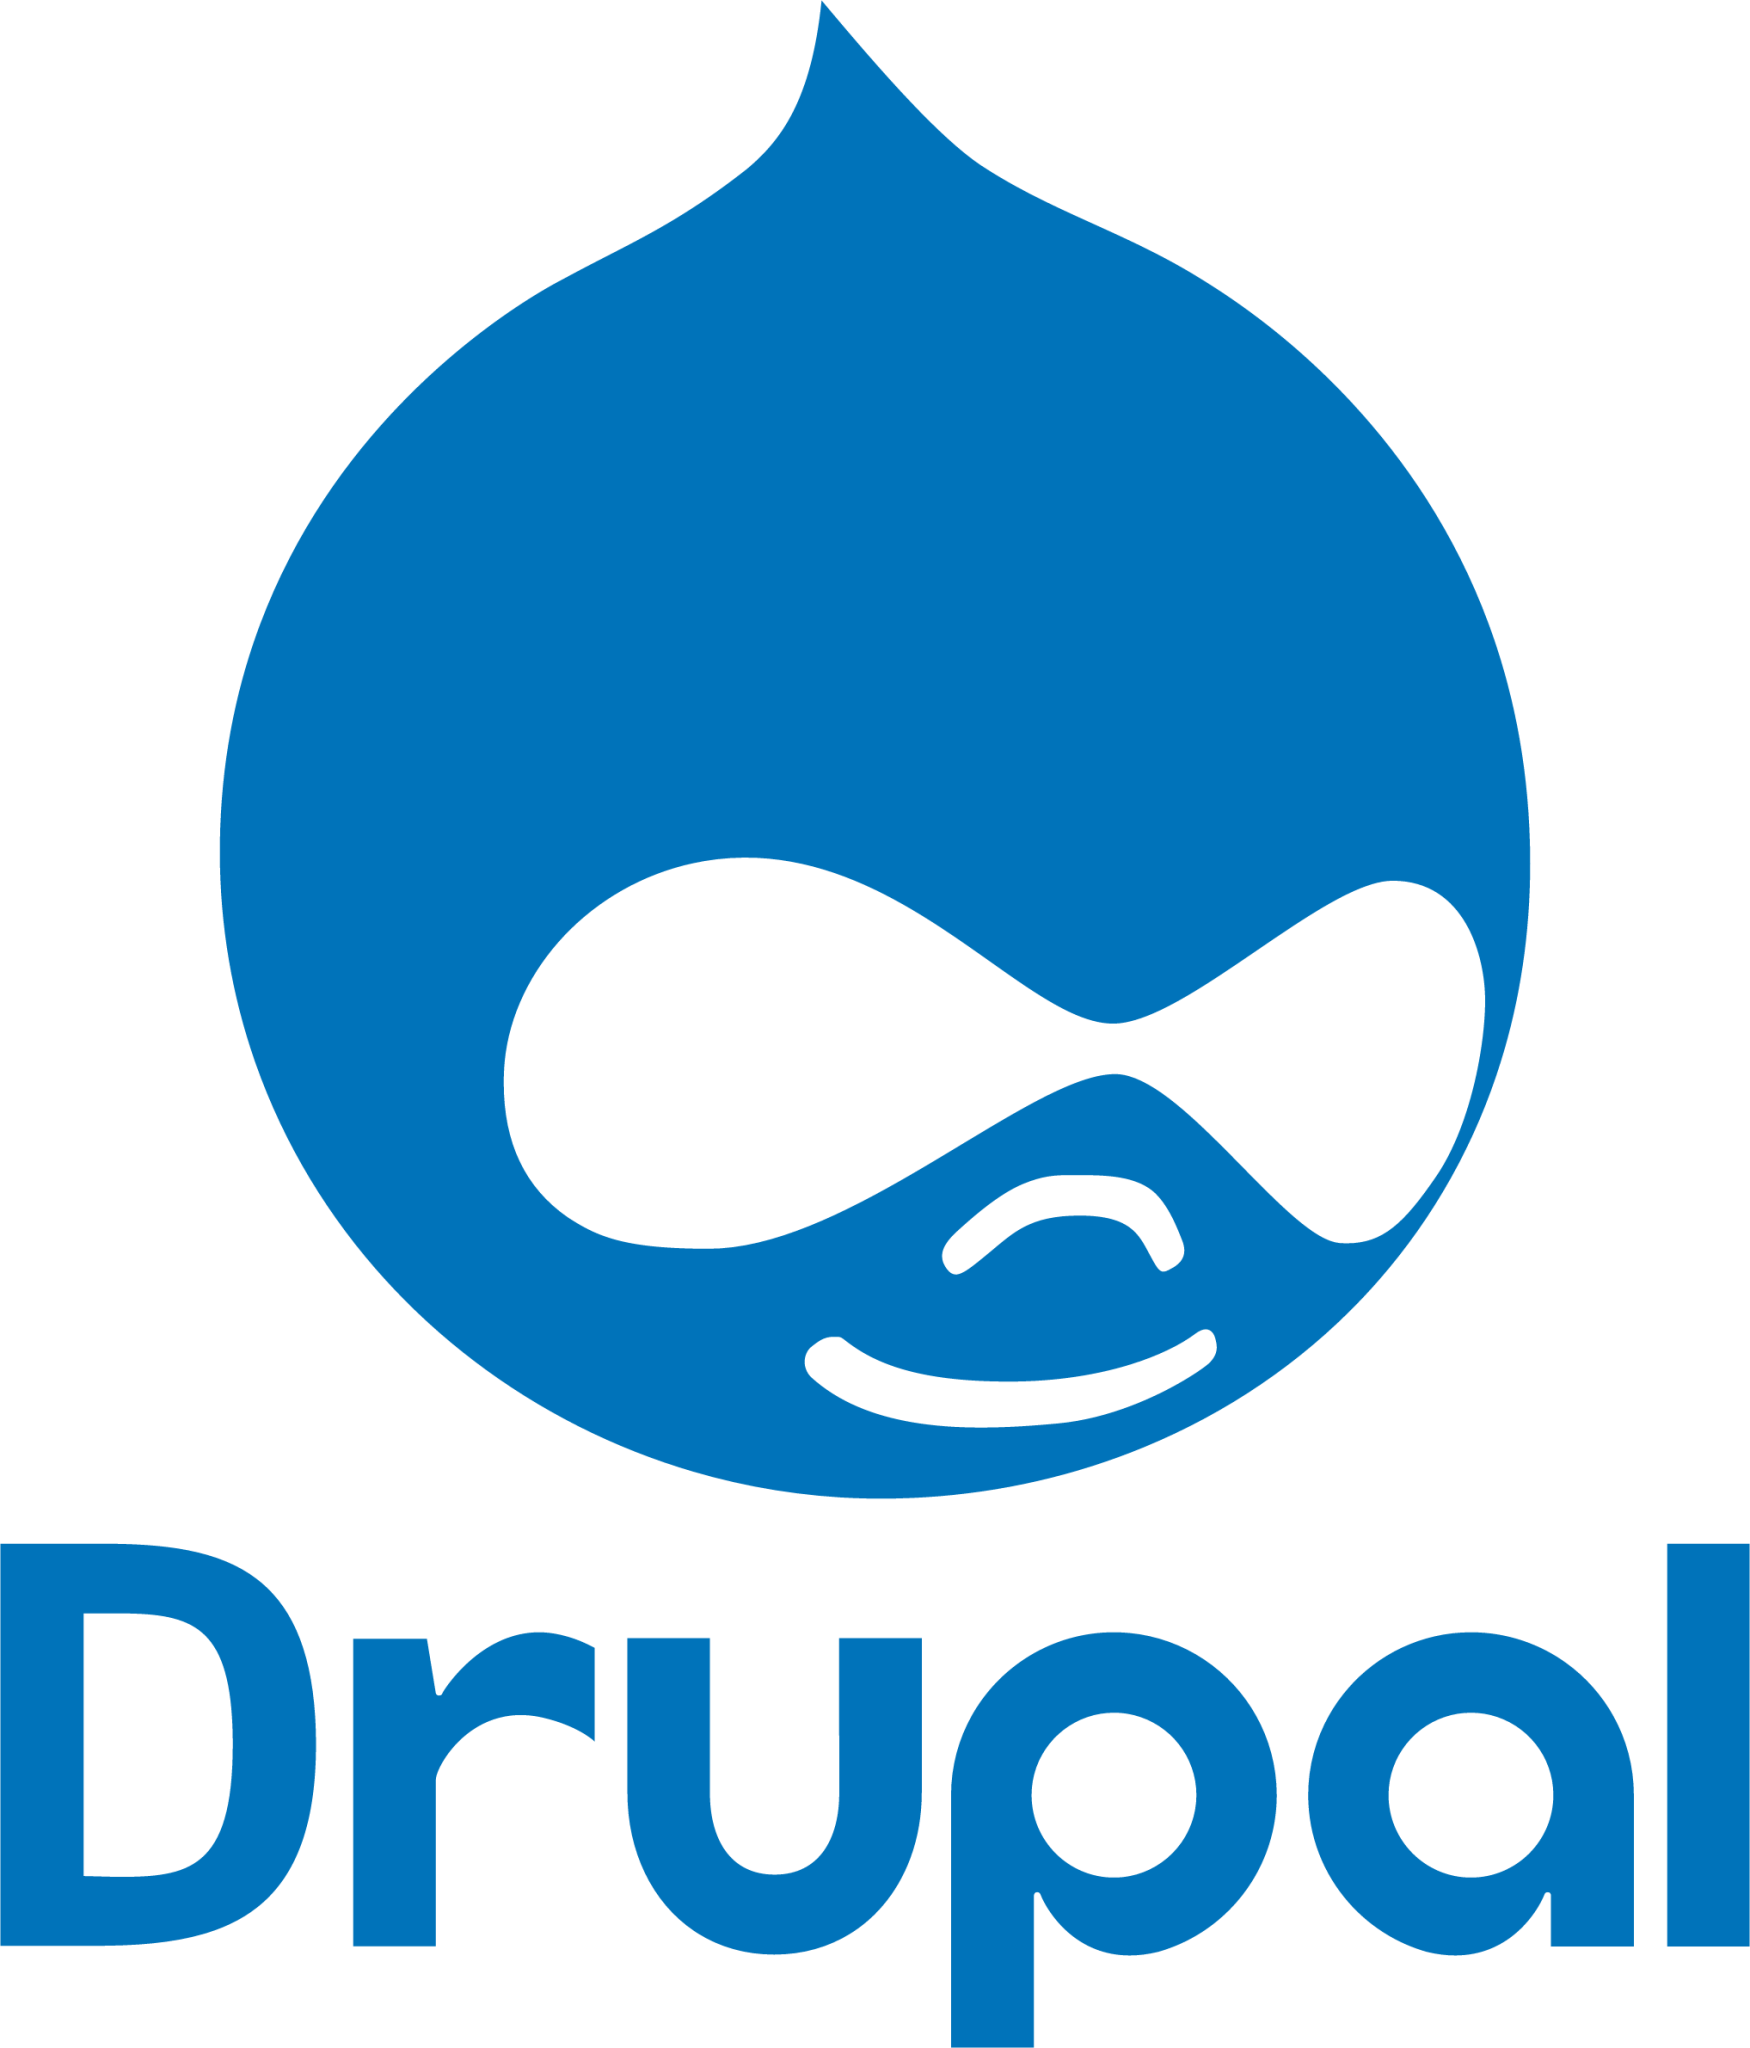 drupal plain wordmark icon